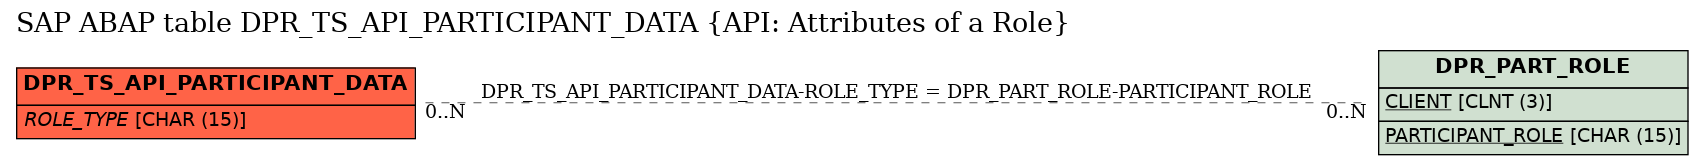 E-R Diagram for table DPR_TS_API_PARTICIPANT_DATA (API: Attributes of a Role)